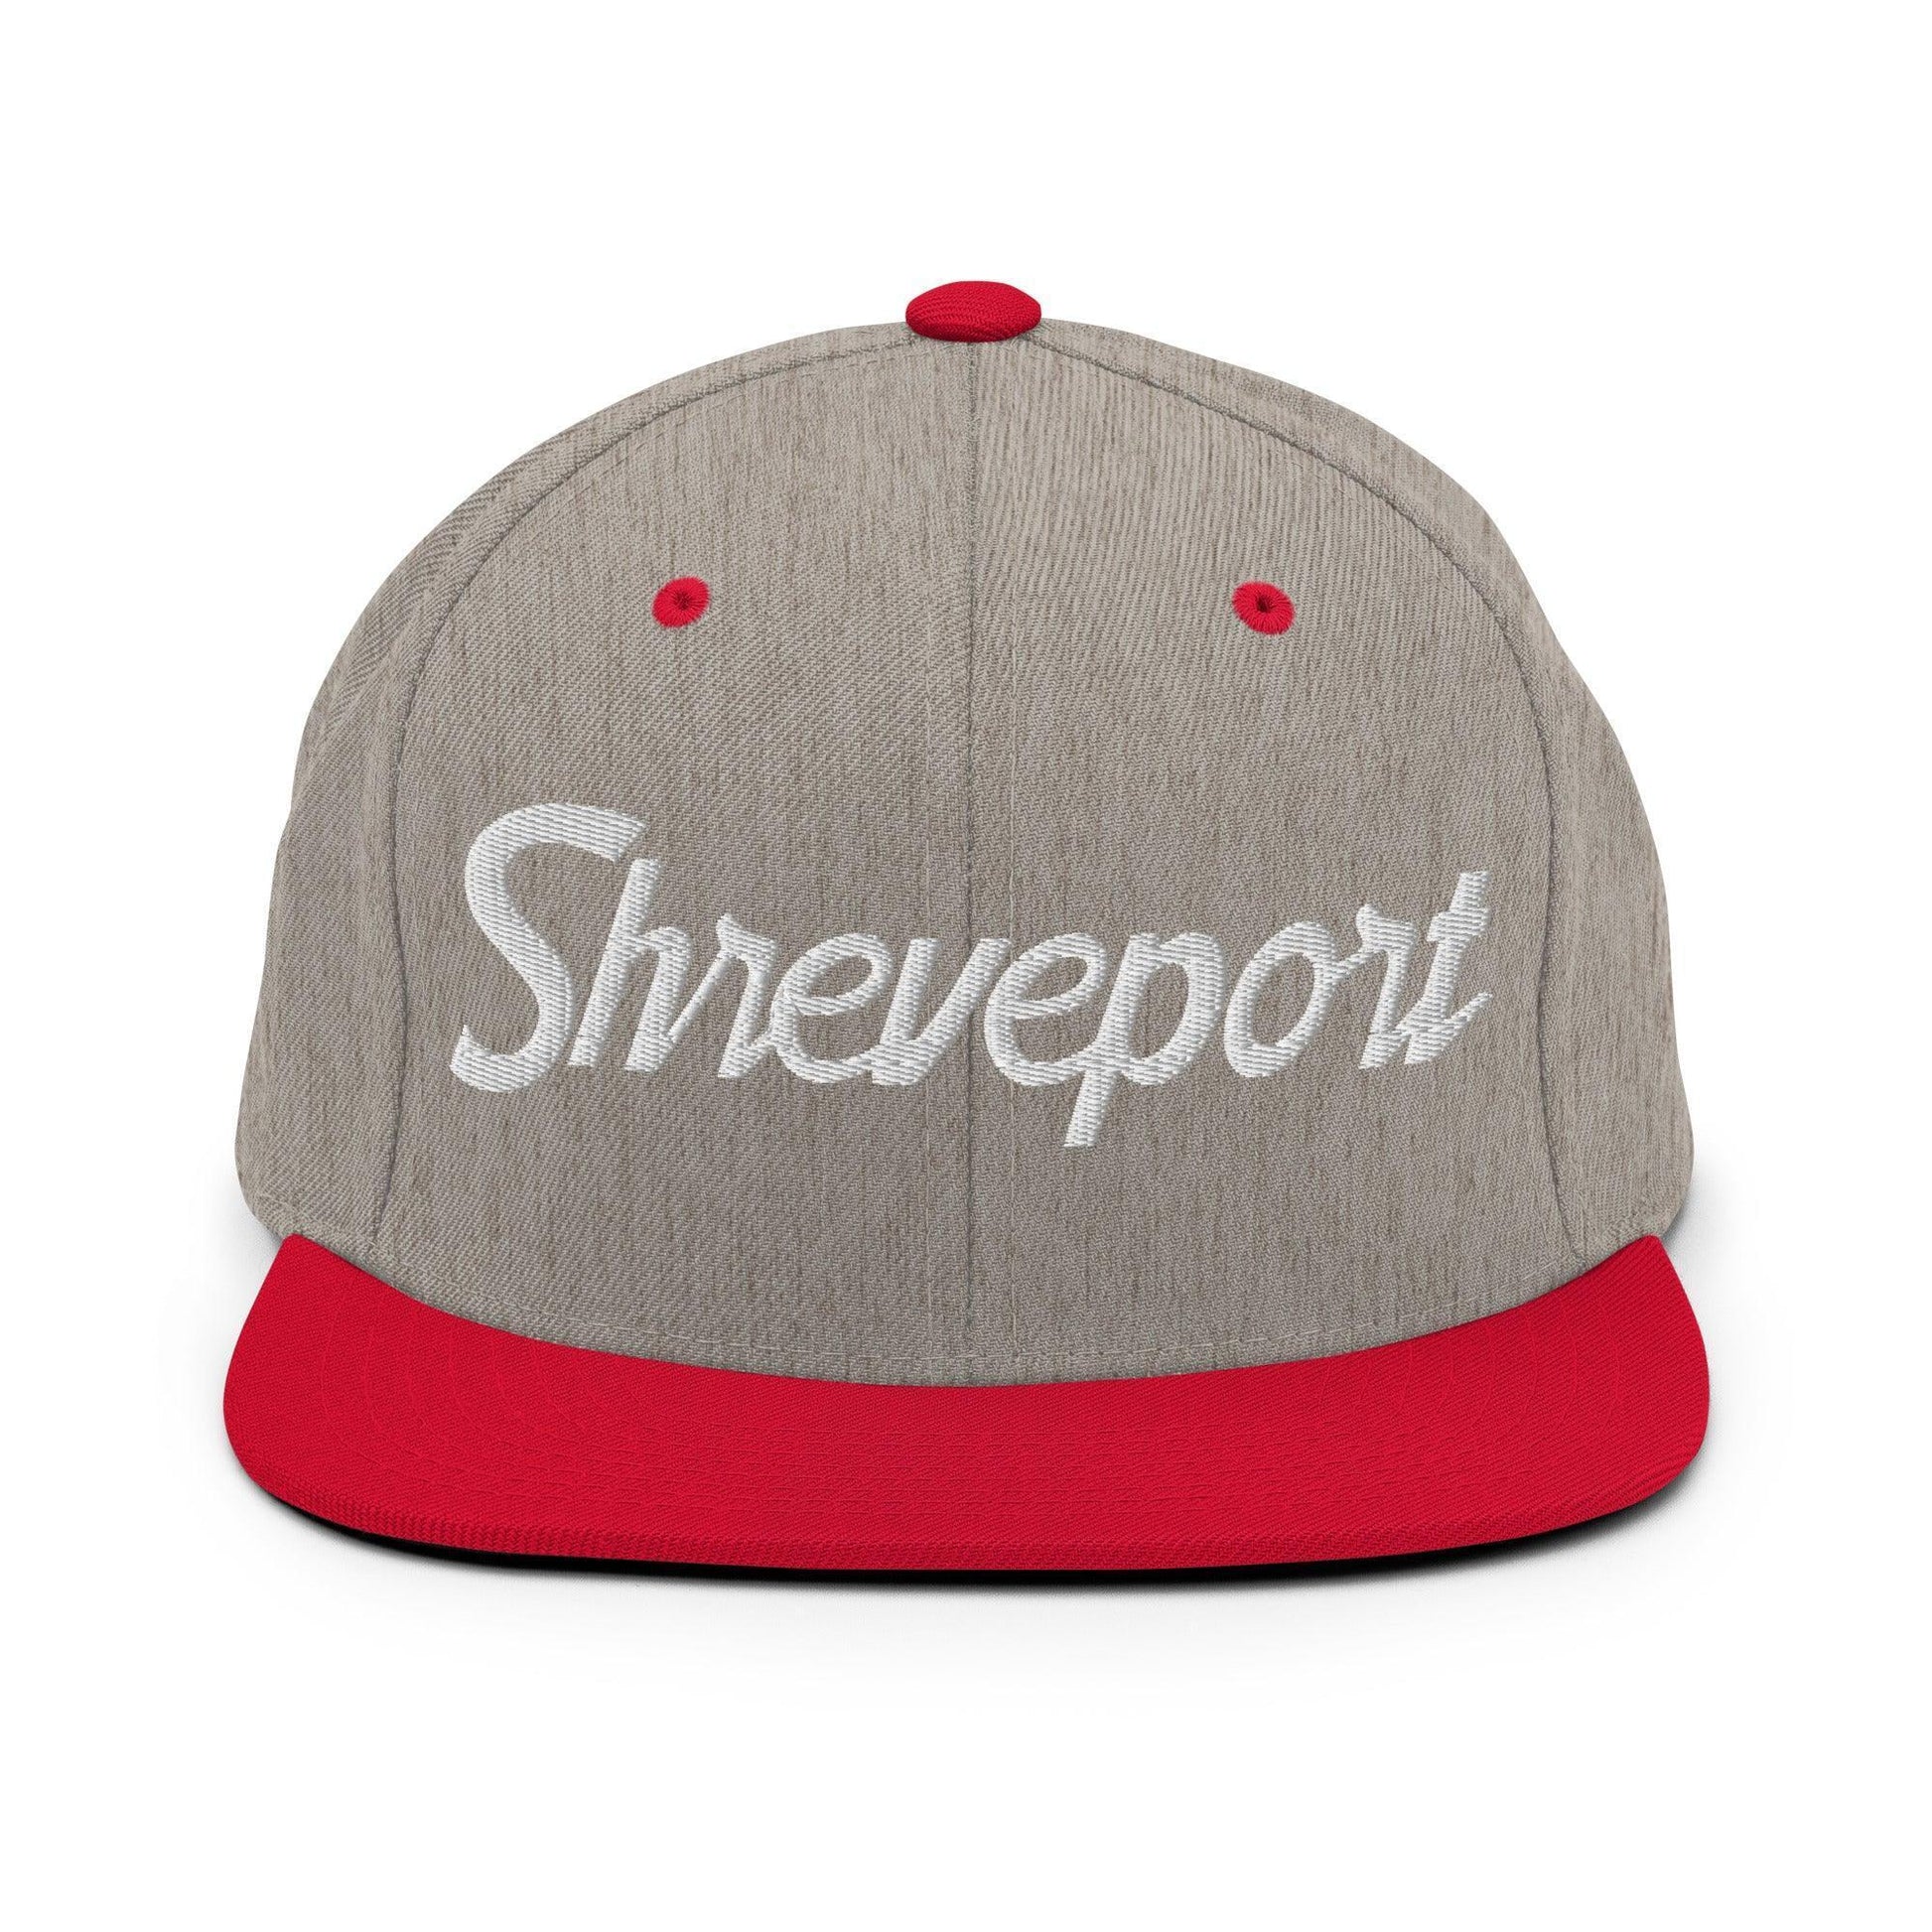 Shreveport Script Snapback Hat Heather Grey/ Red